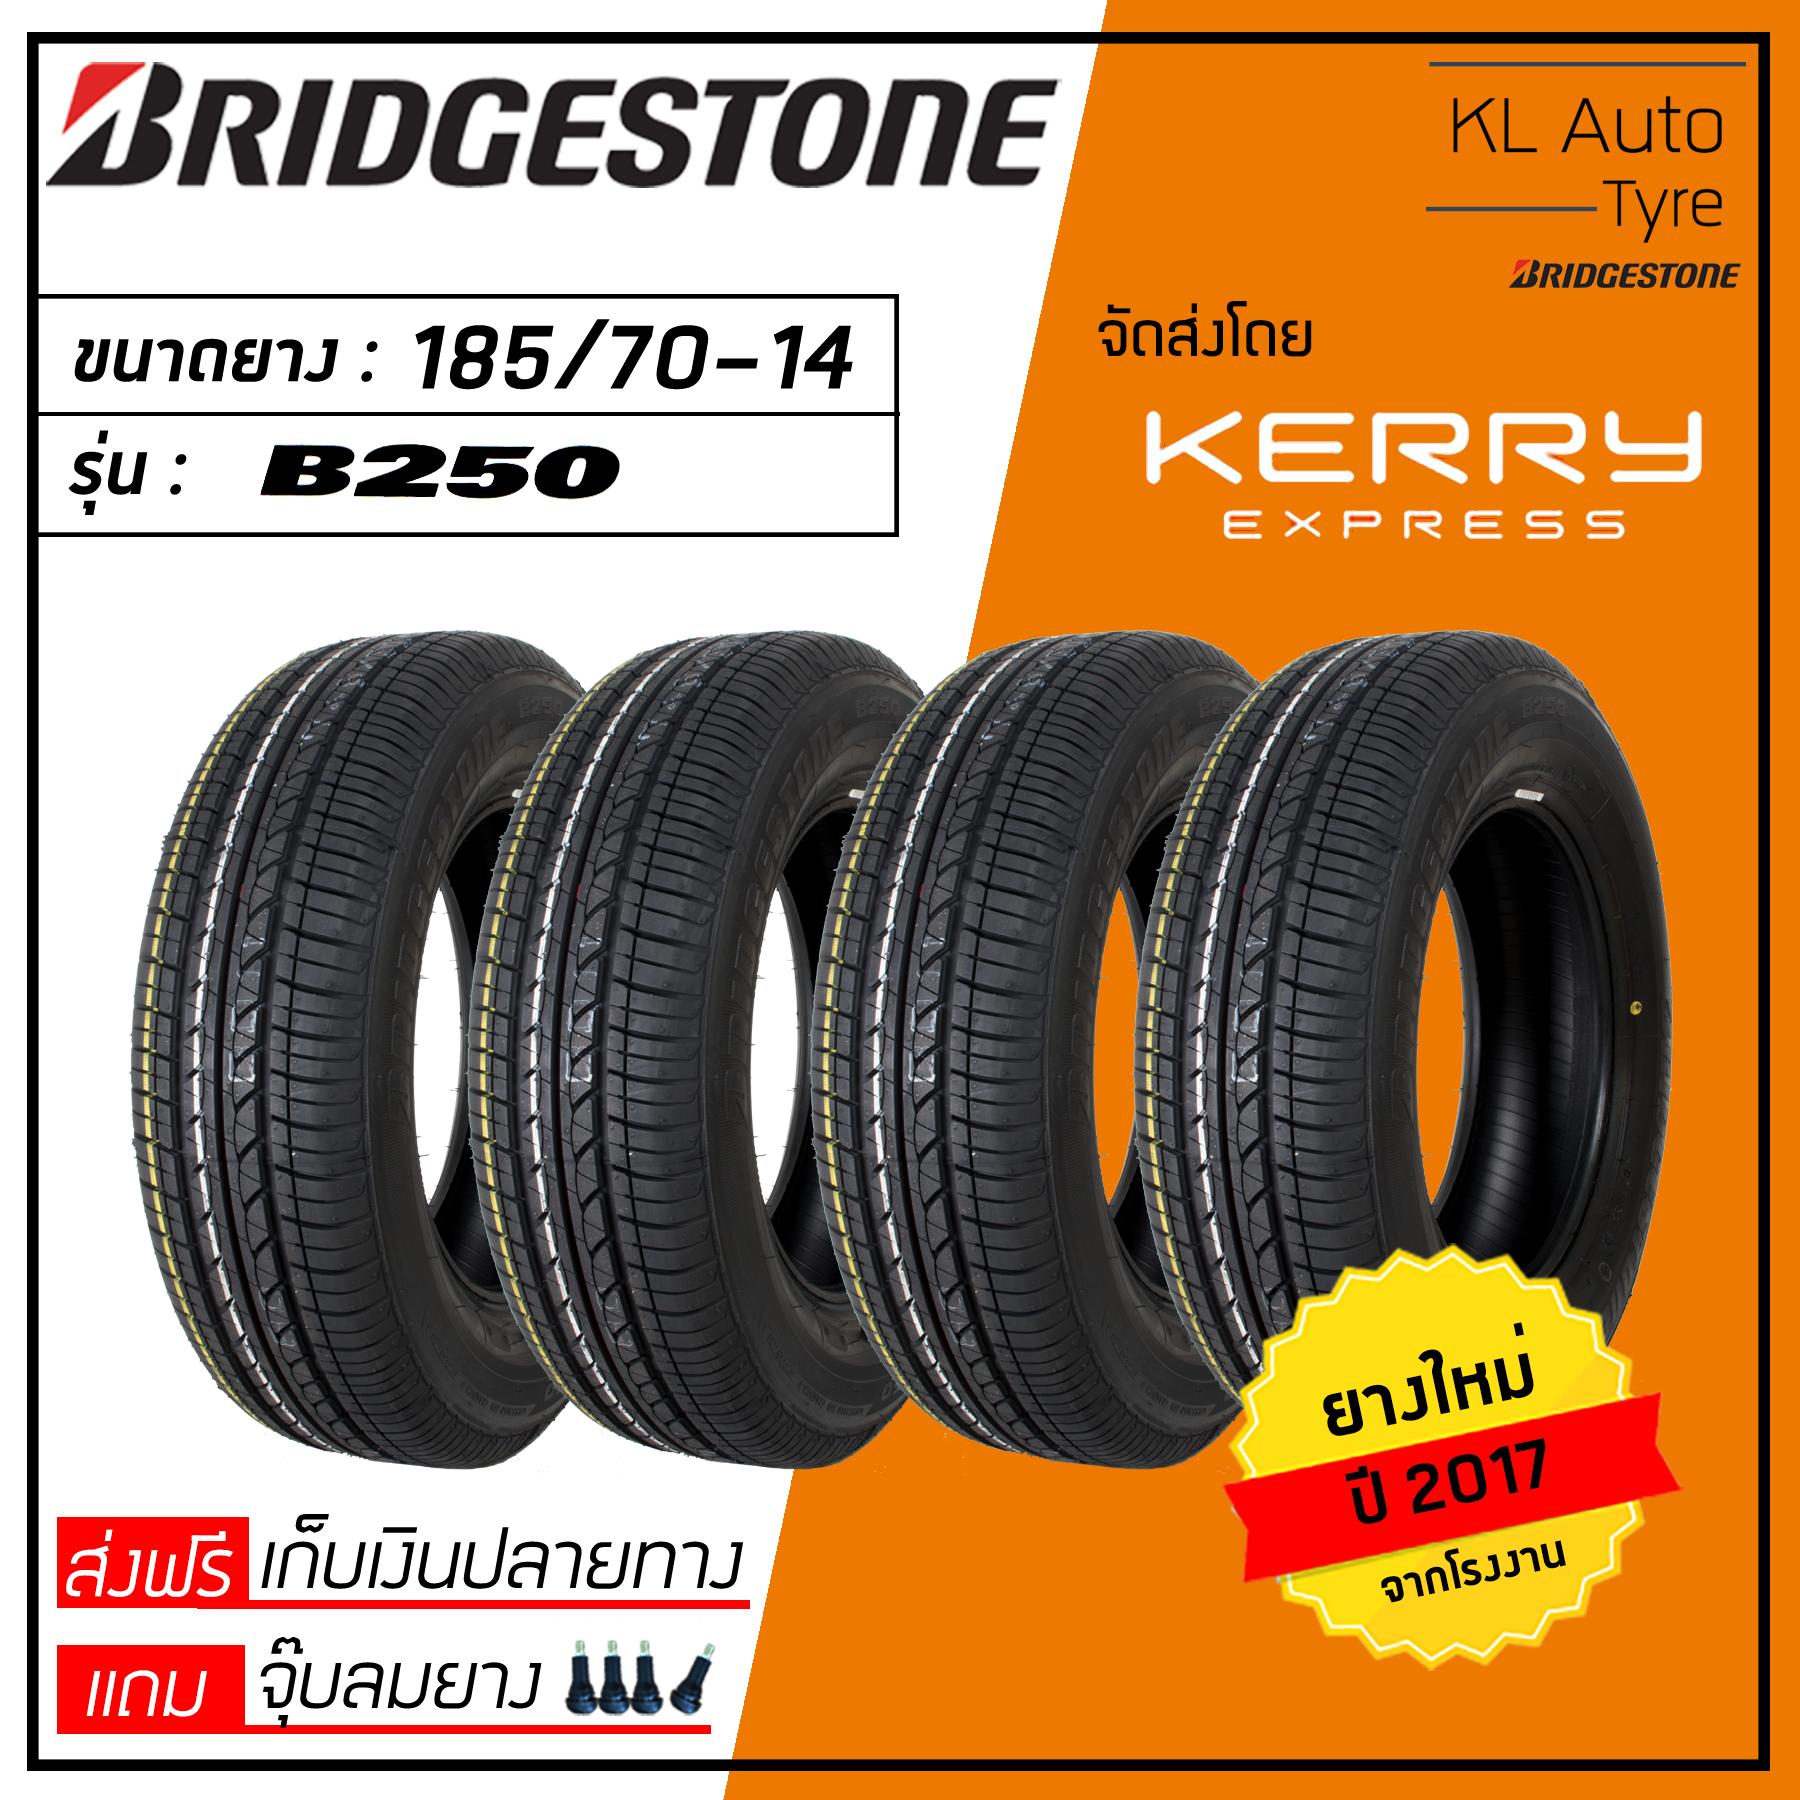 Bridgestone 185/70-14 B250 4 เส้น ปี 17 (ฟรี จุ๊บยาง 4 ตัว มูลค่า 200 บาท)